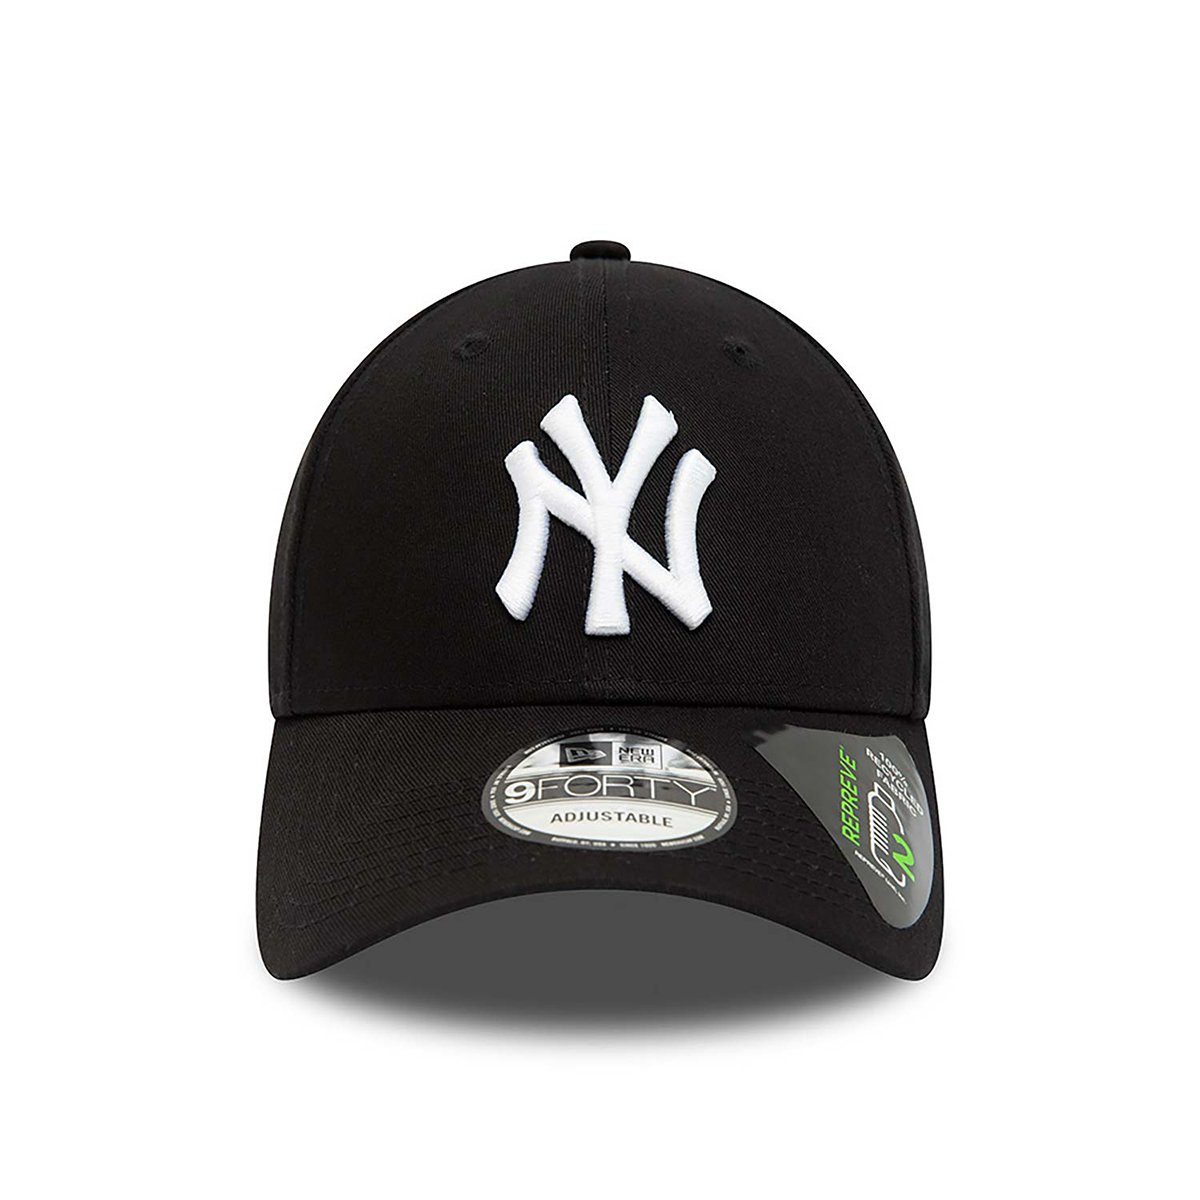 New New Cap York Baseball Era Repreve Yankees